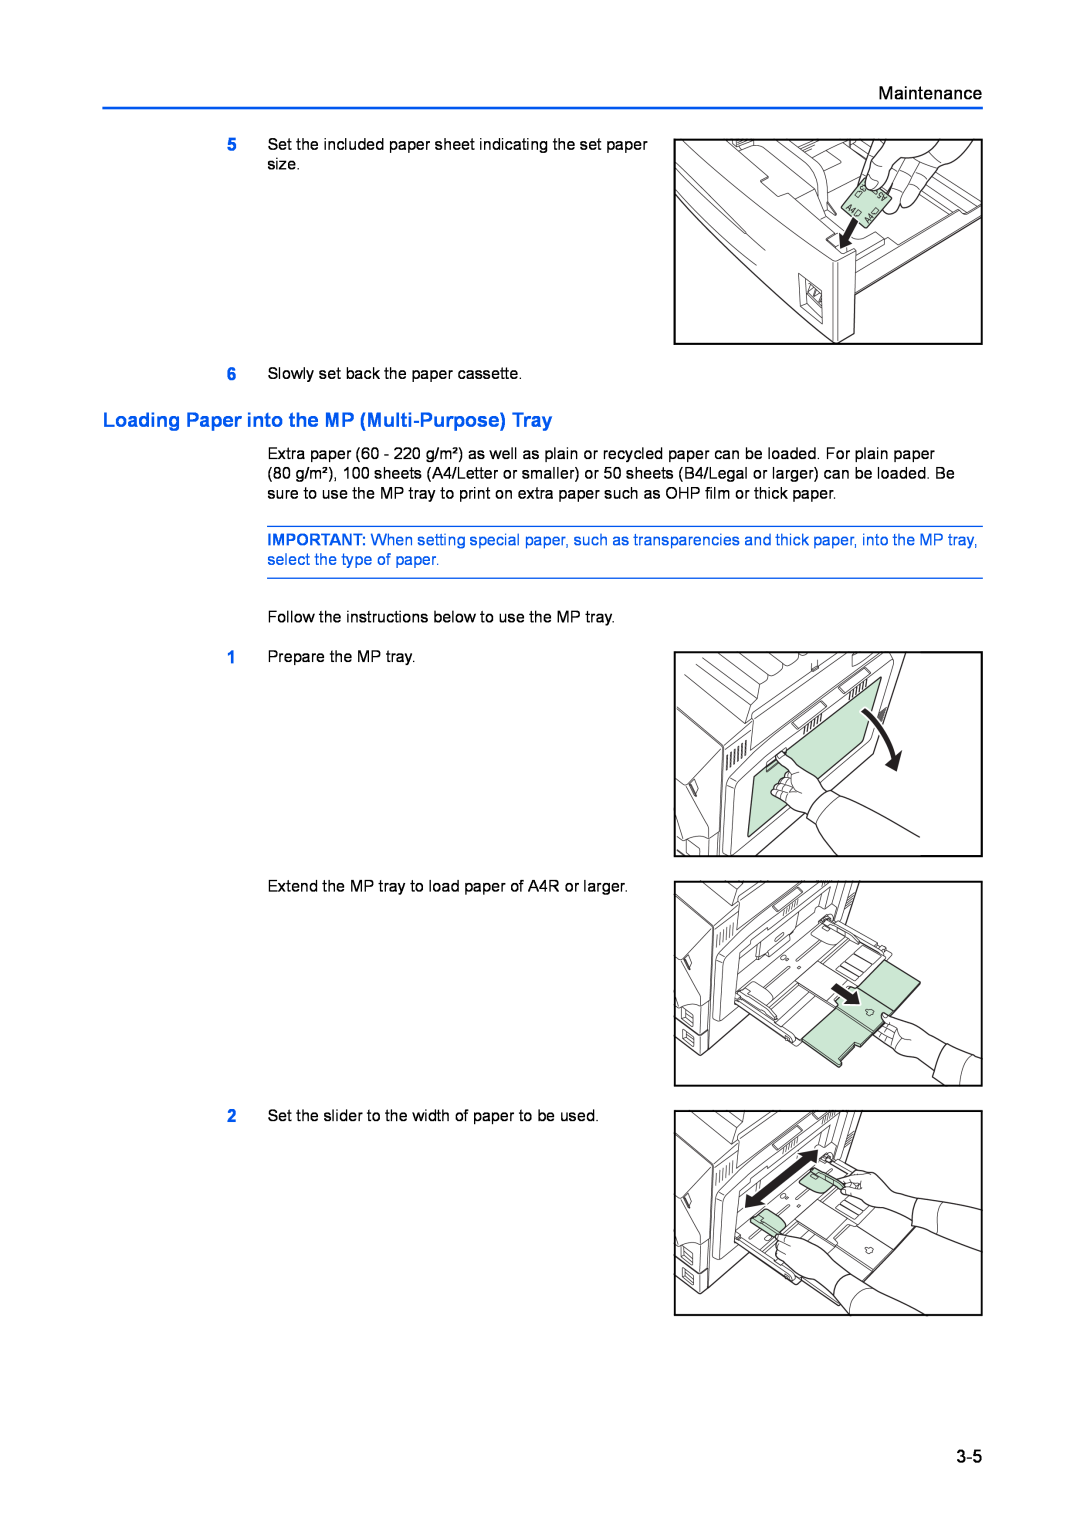 Kyocera FS-C8100DN manual Loading Paper into the MP Multi-Purpose Tray, Maintenance 